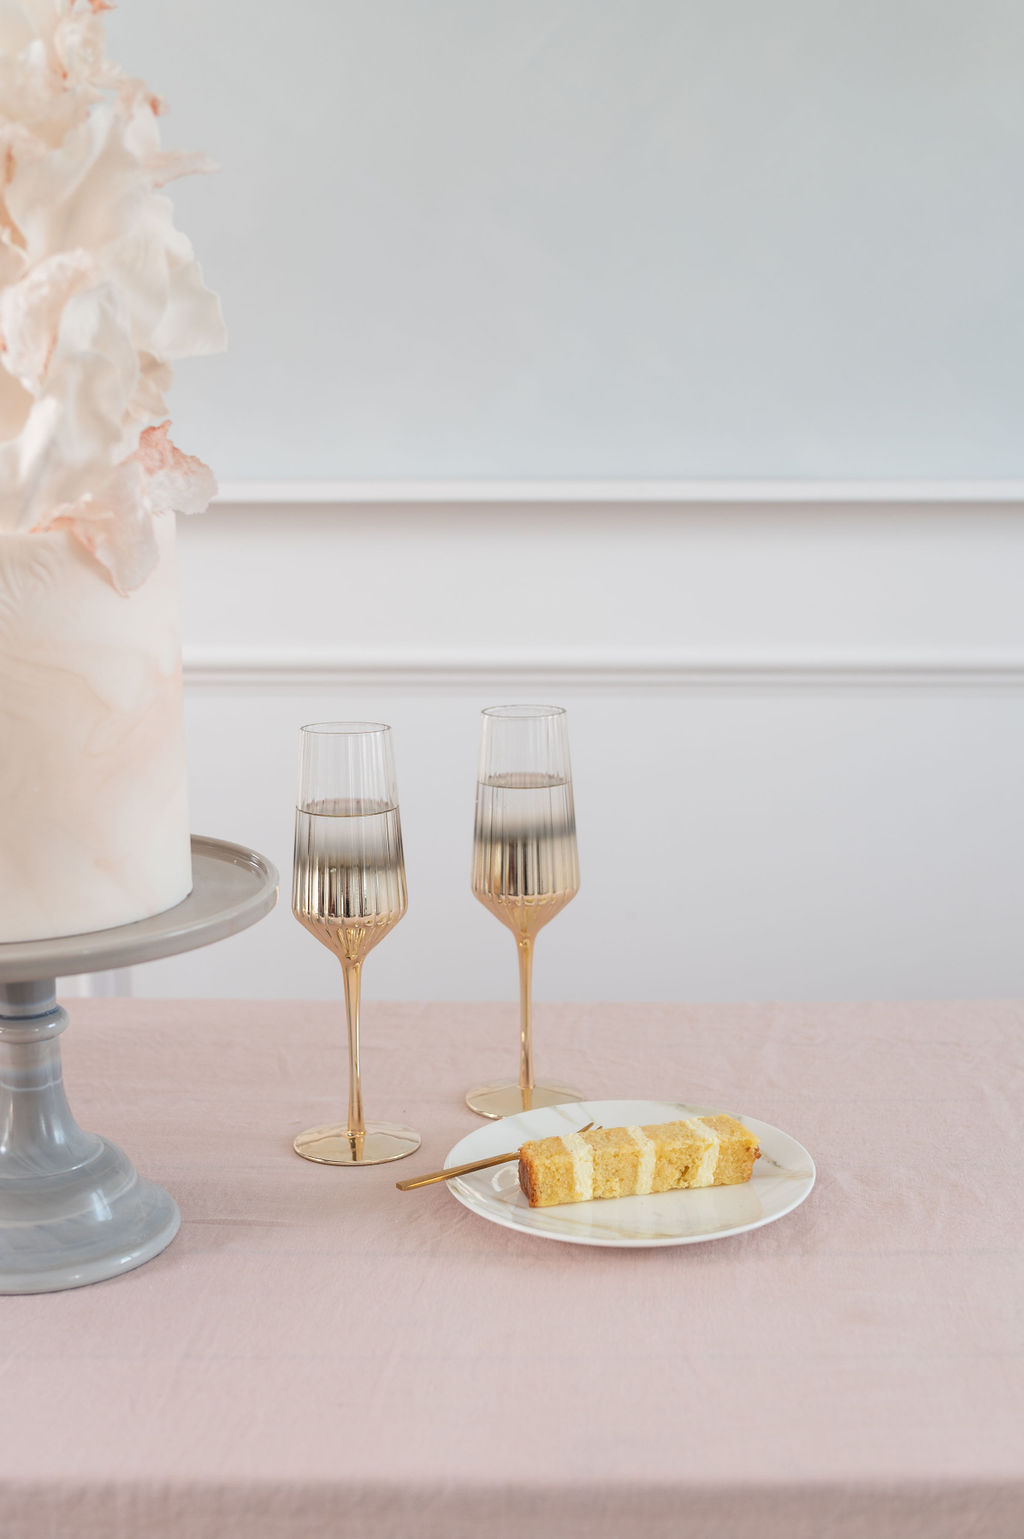 Luxury wedding cake designer | Contemporary wedding cakes | Wedding cakes in London and Home Counties | Louise Hayes Cake Design